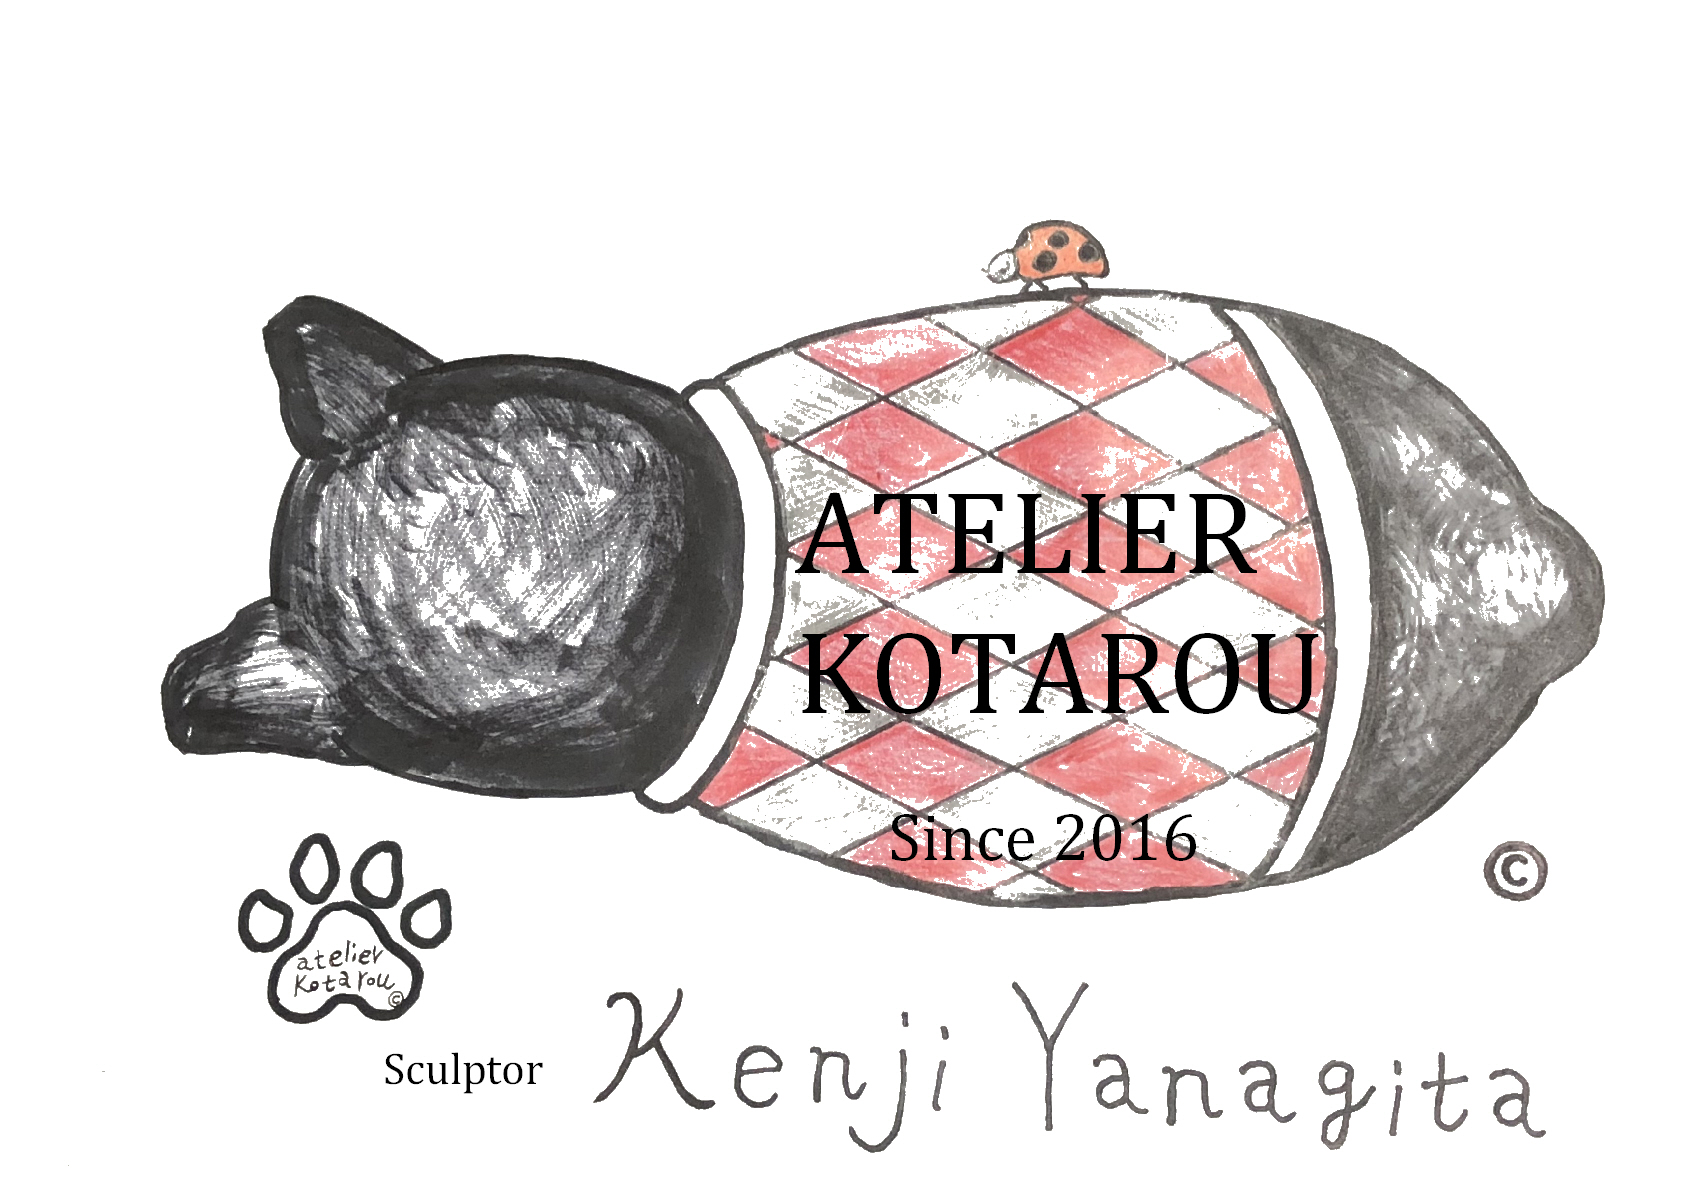 atelier kotarou sculptor kenji yanagita official web site